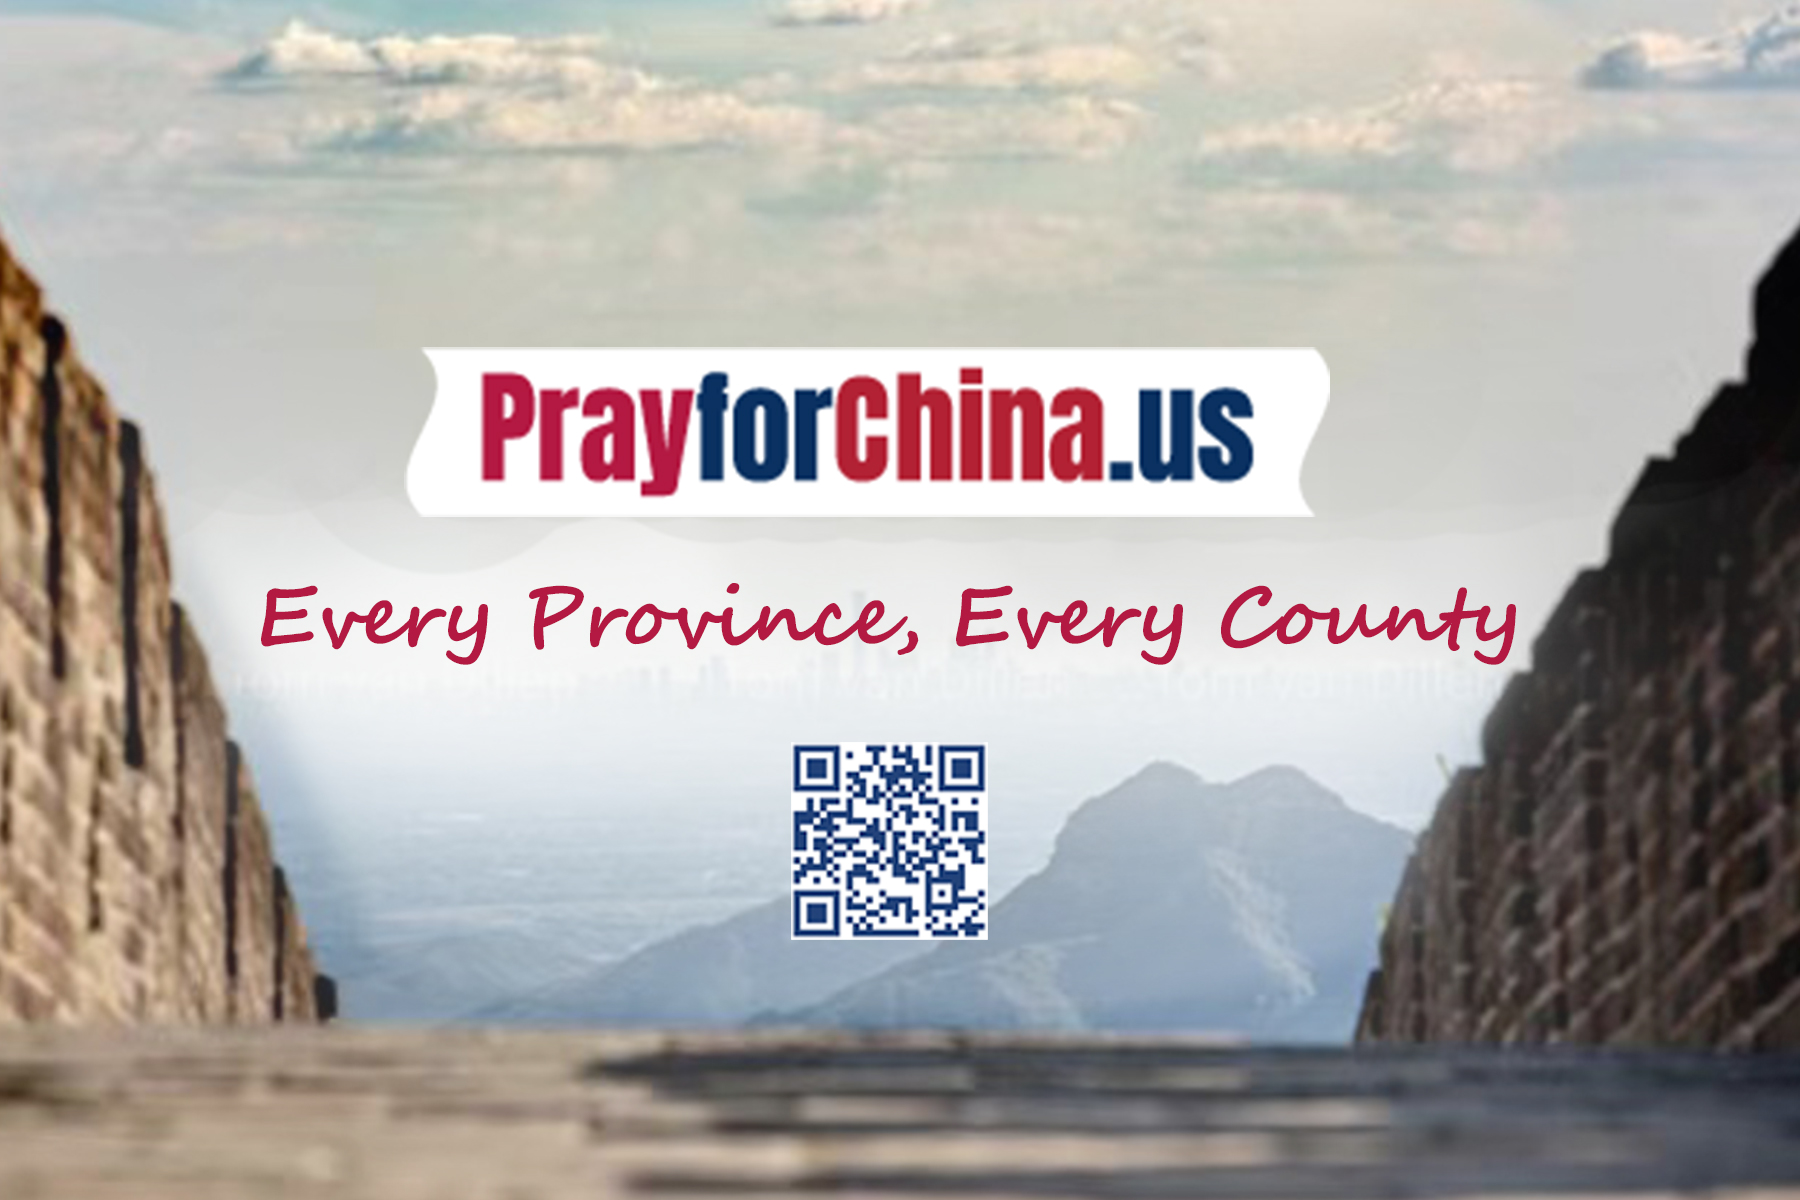 Pray for China Graphic